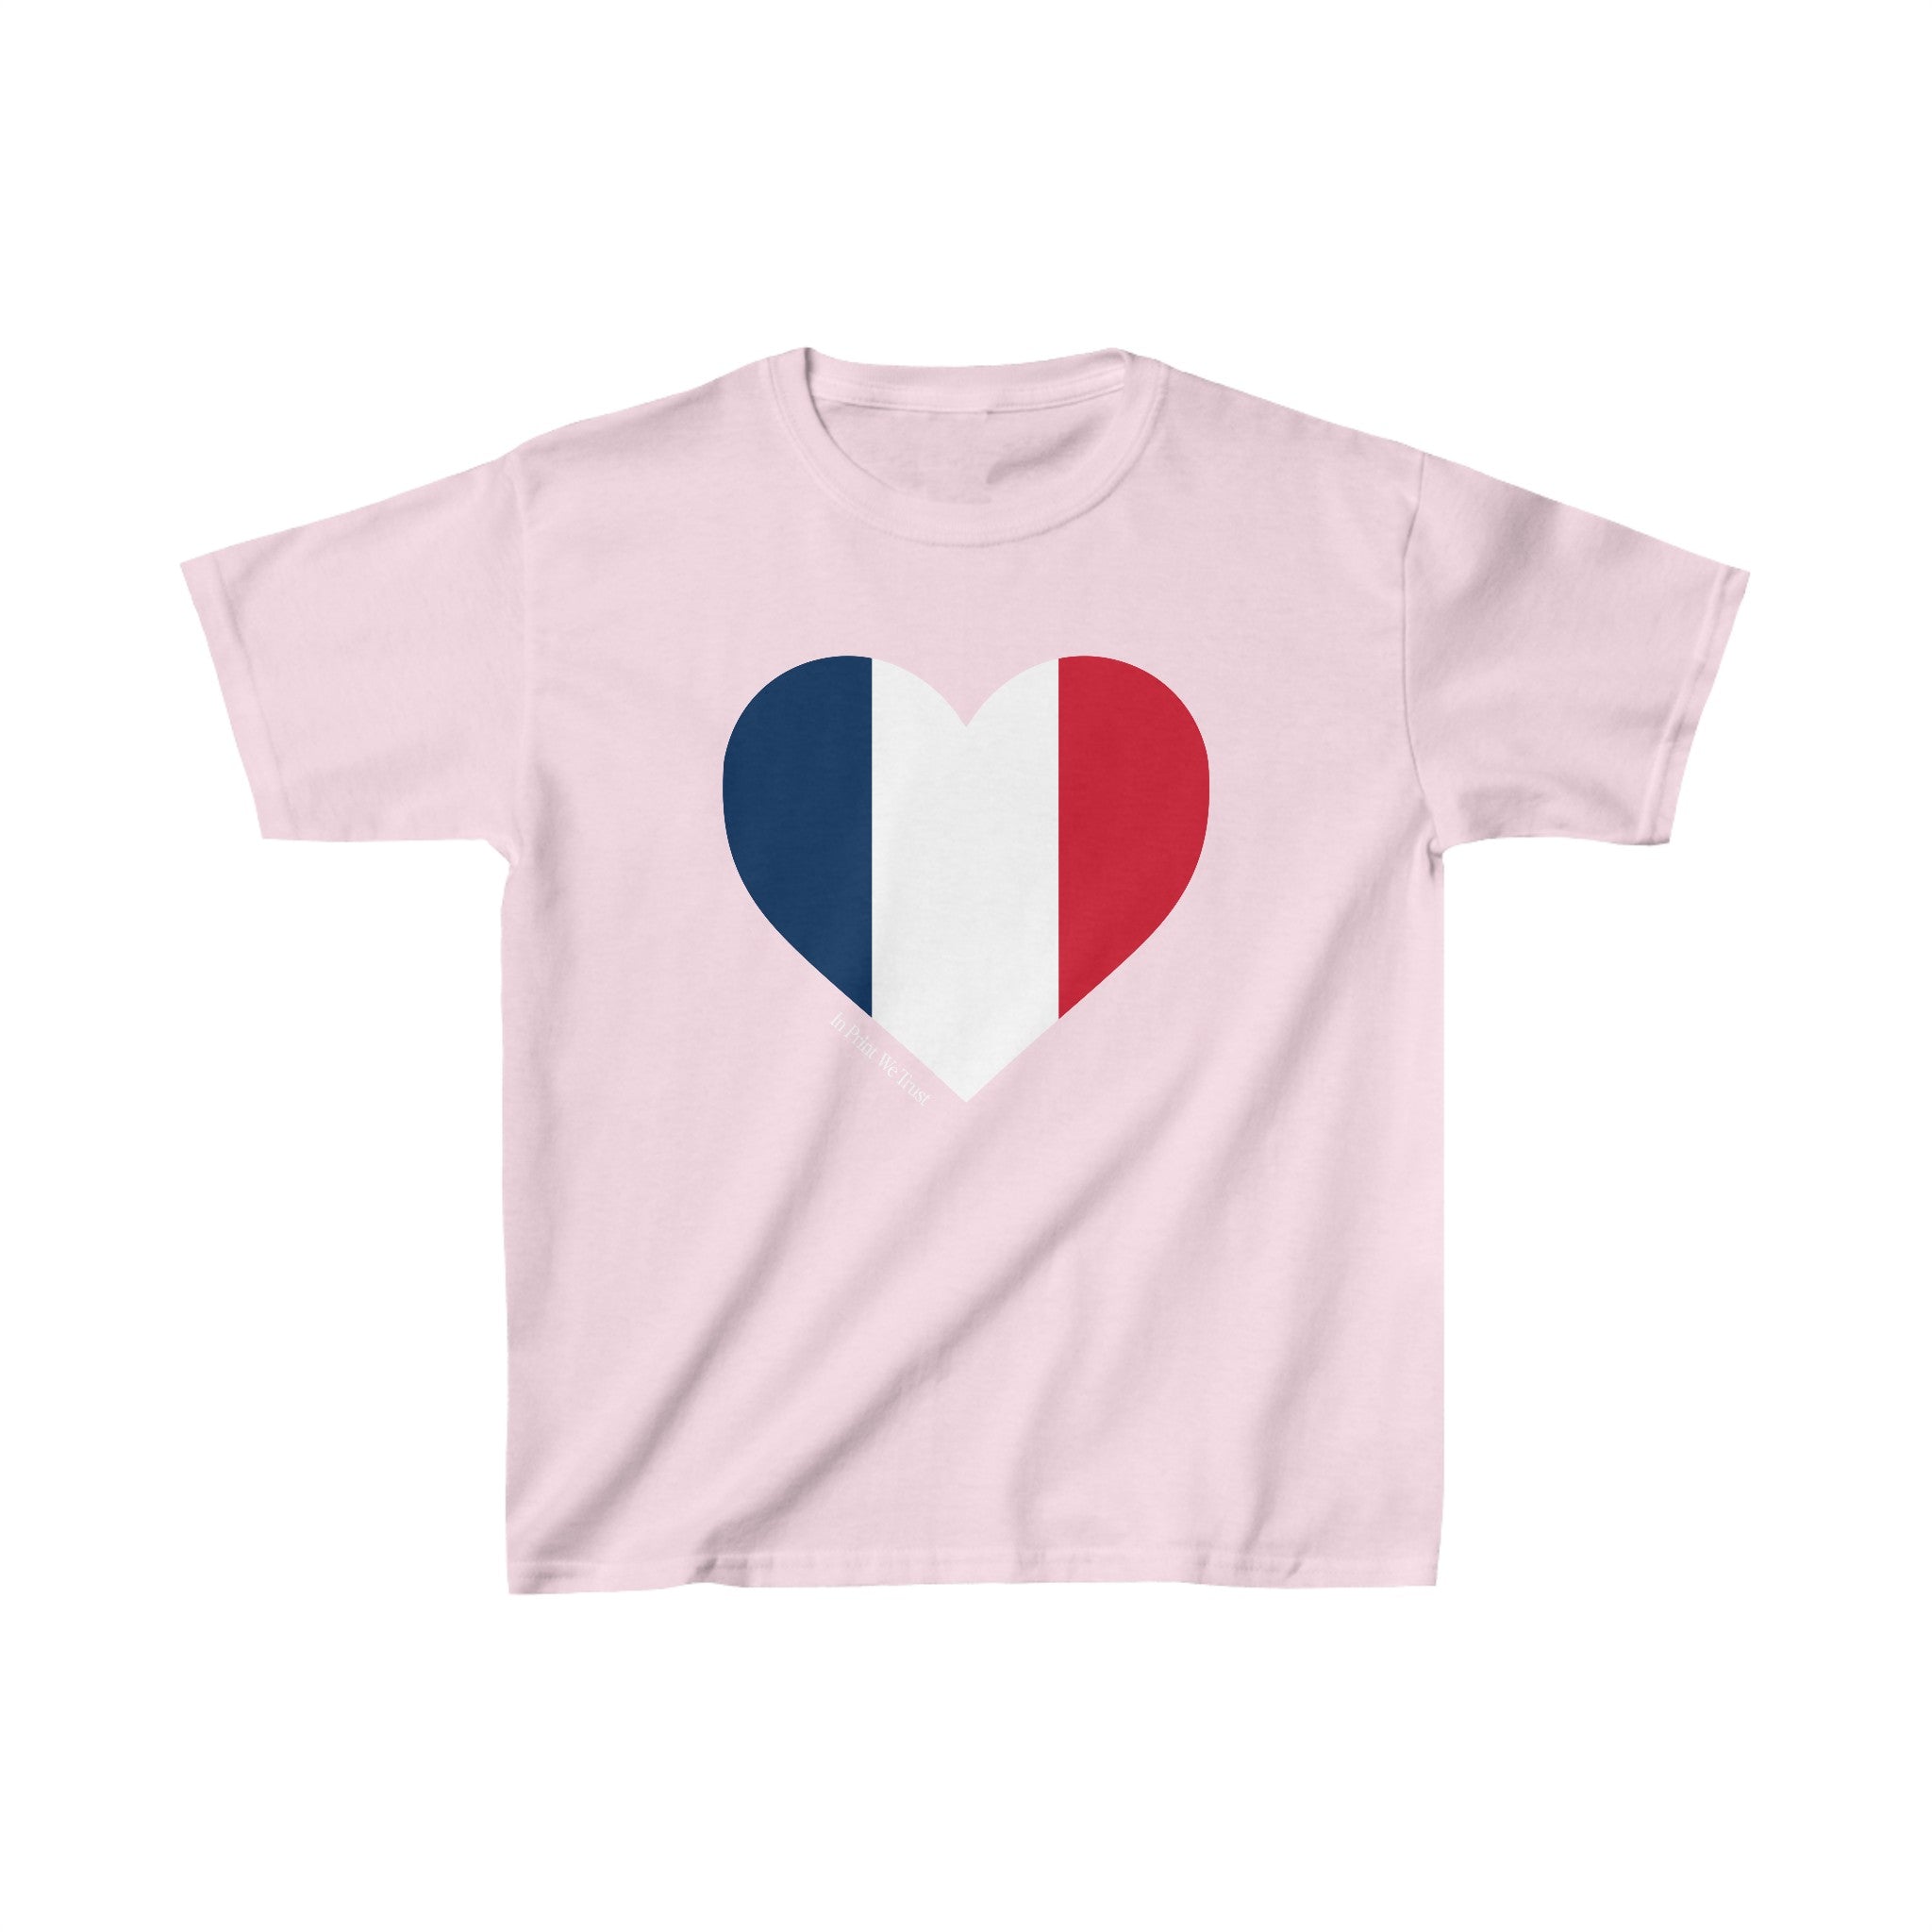 'France' baby tee - In Print We Trust